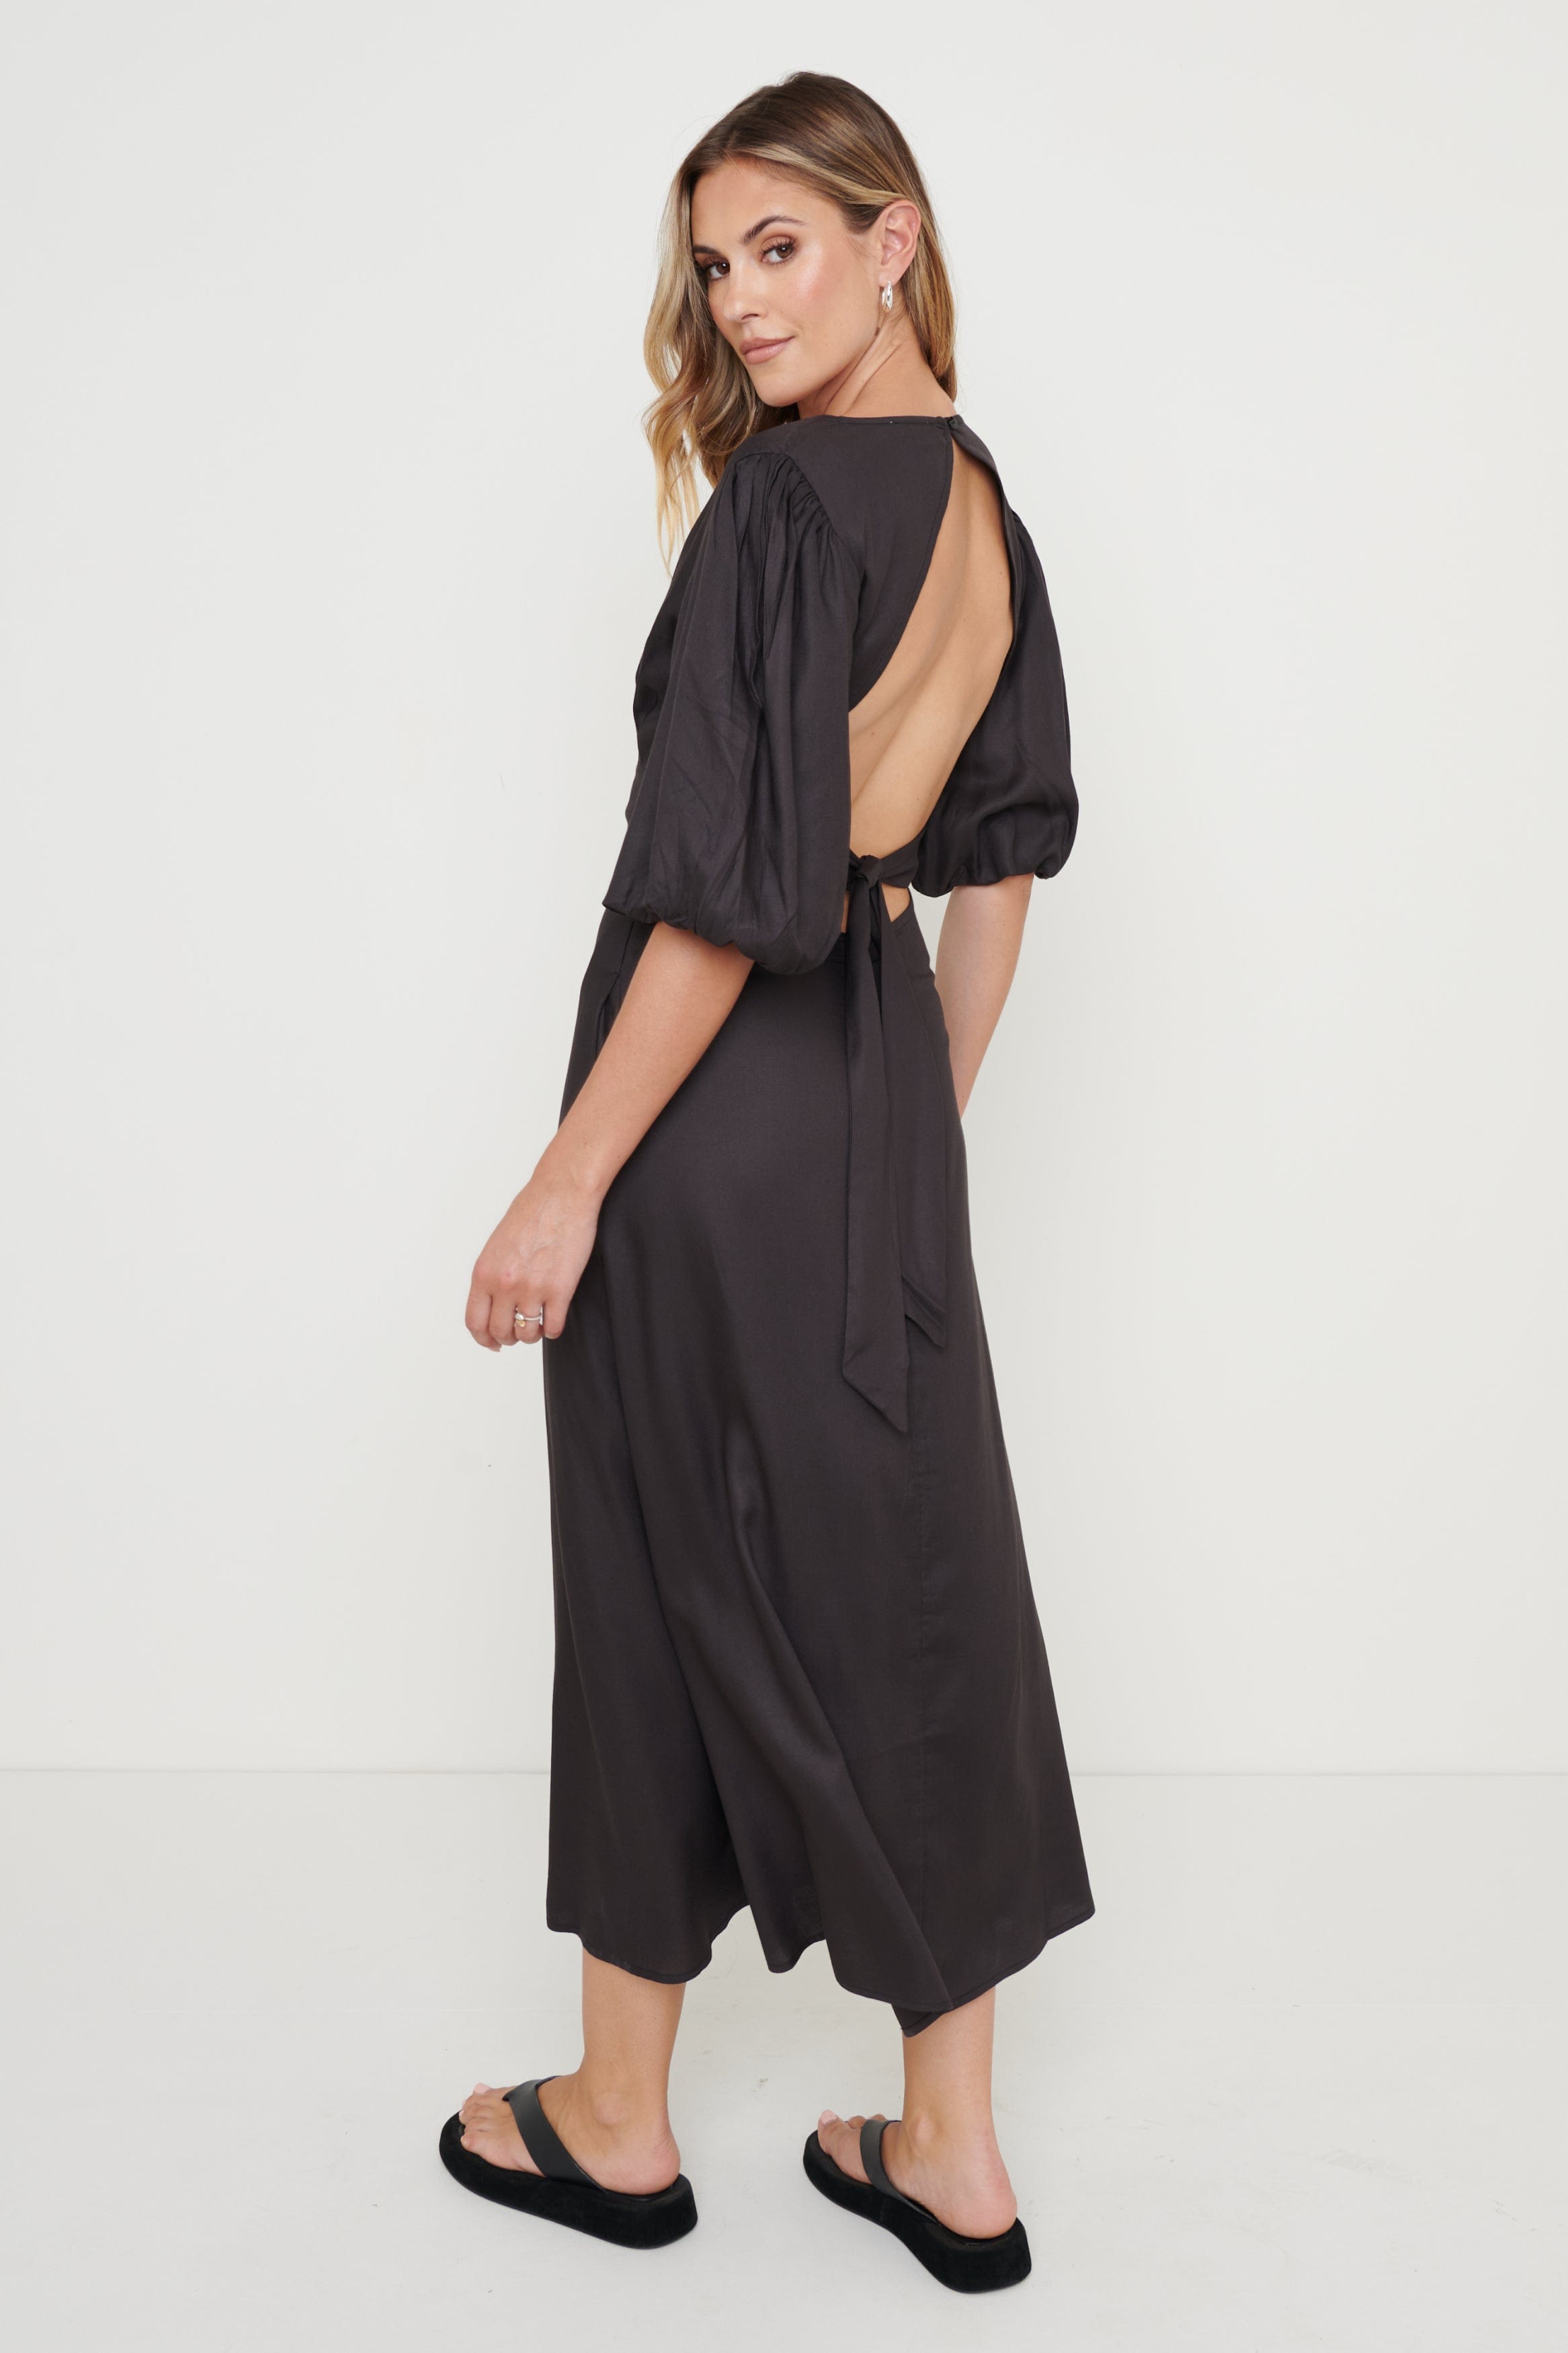 Jeanelle Puff Sleeve Backless Dress - Black, 10